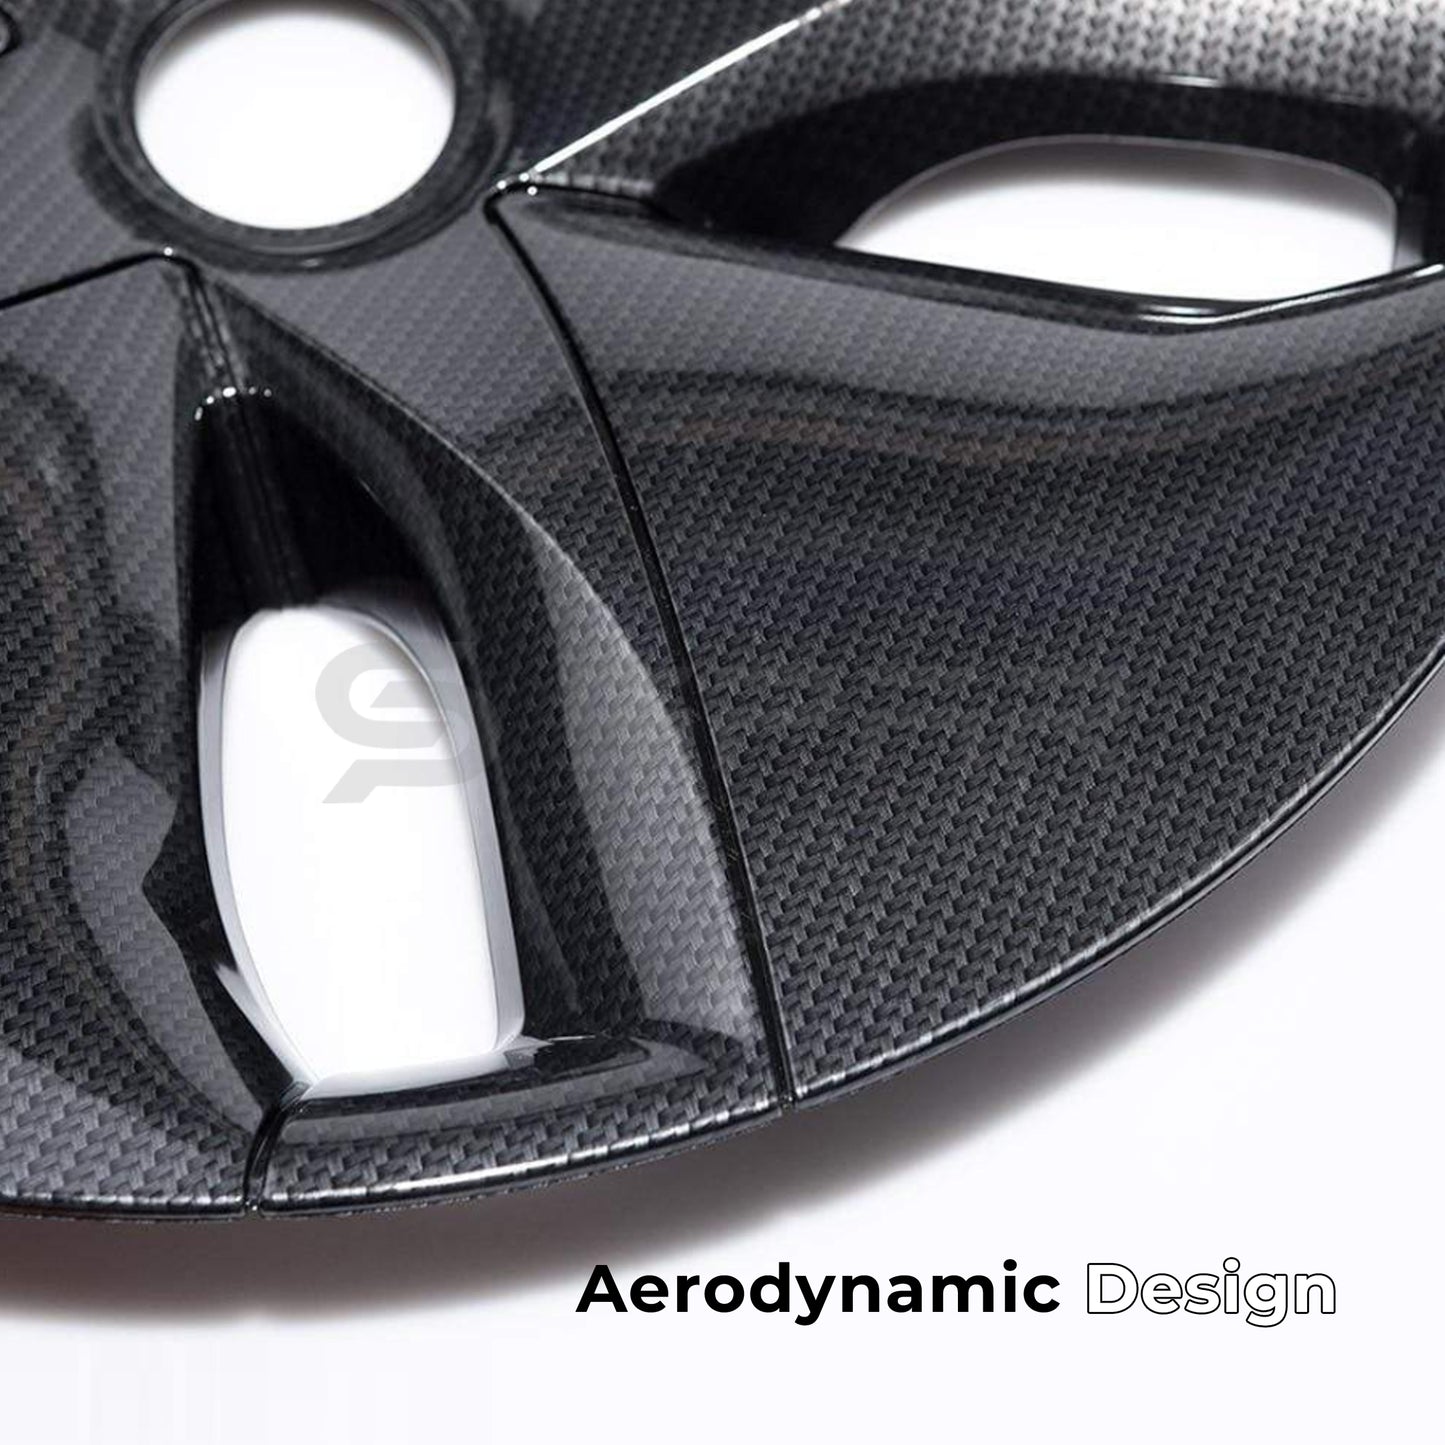 Carbon Fiber Custom Aero Wheel Upgrade (4 pcs.) for Tesla Model 3